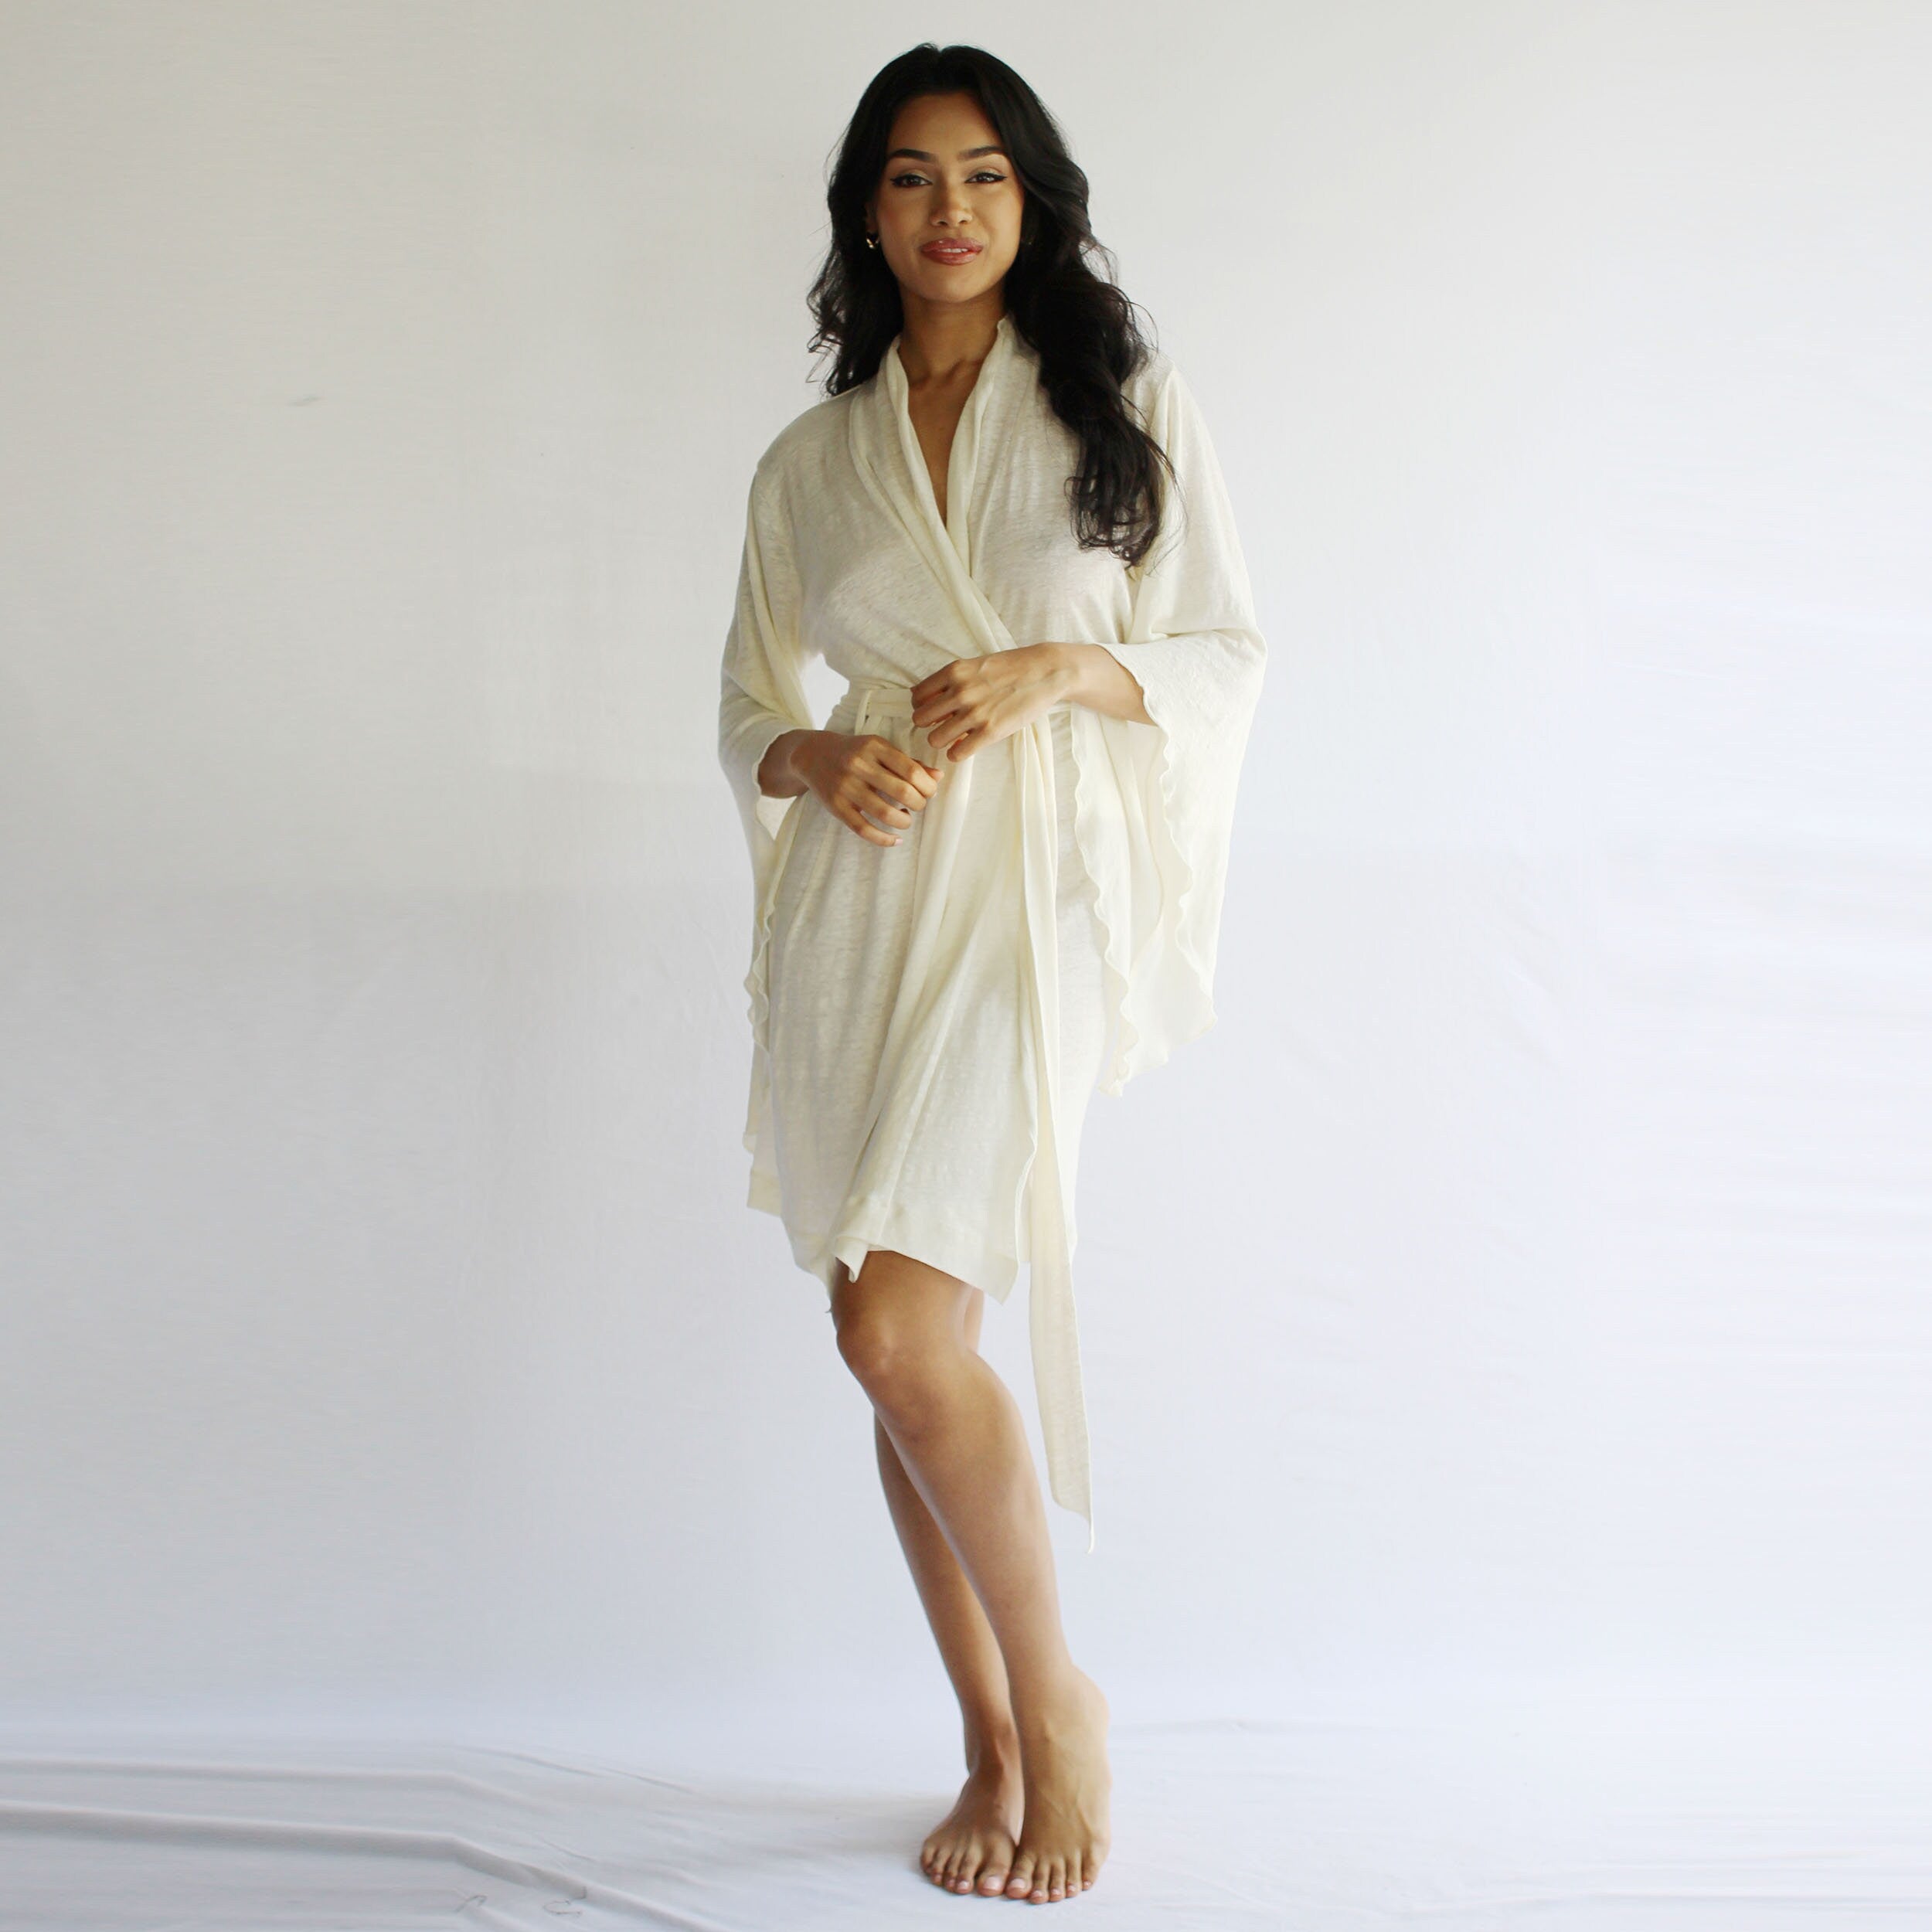 sheer silk robe with feather trim - 100% silk chiffon bridal lingerie –  Sandmaiden Sleepwear